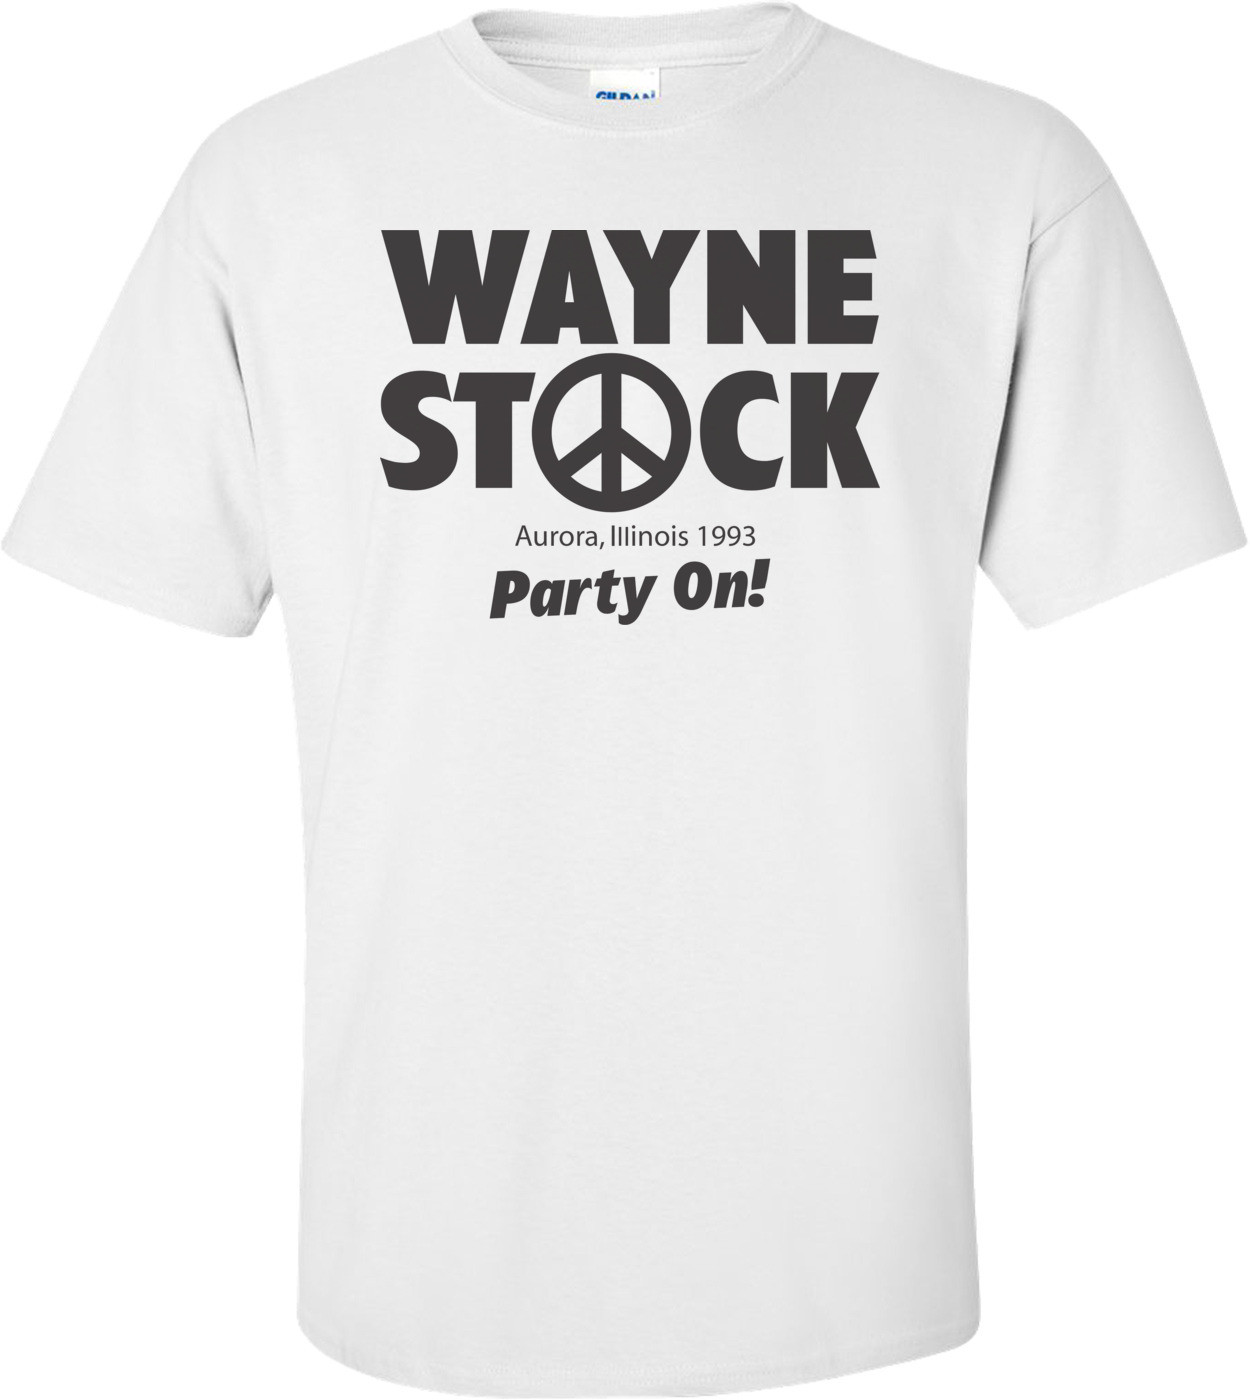 Wayne Stock - Wayne's World